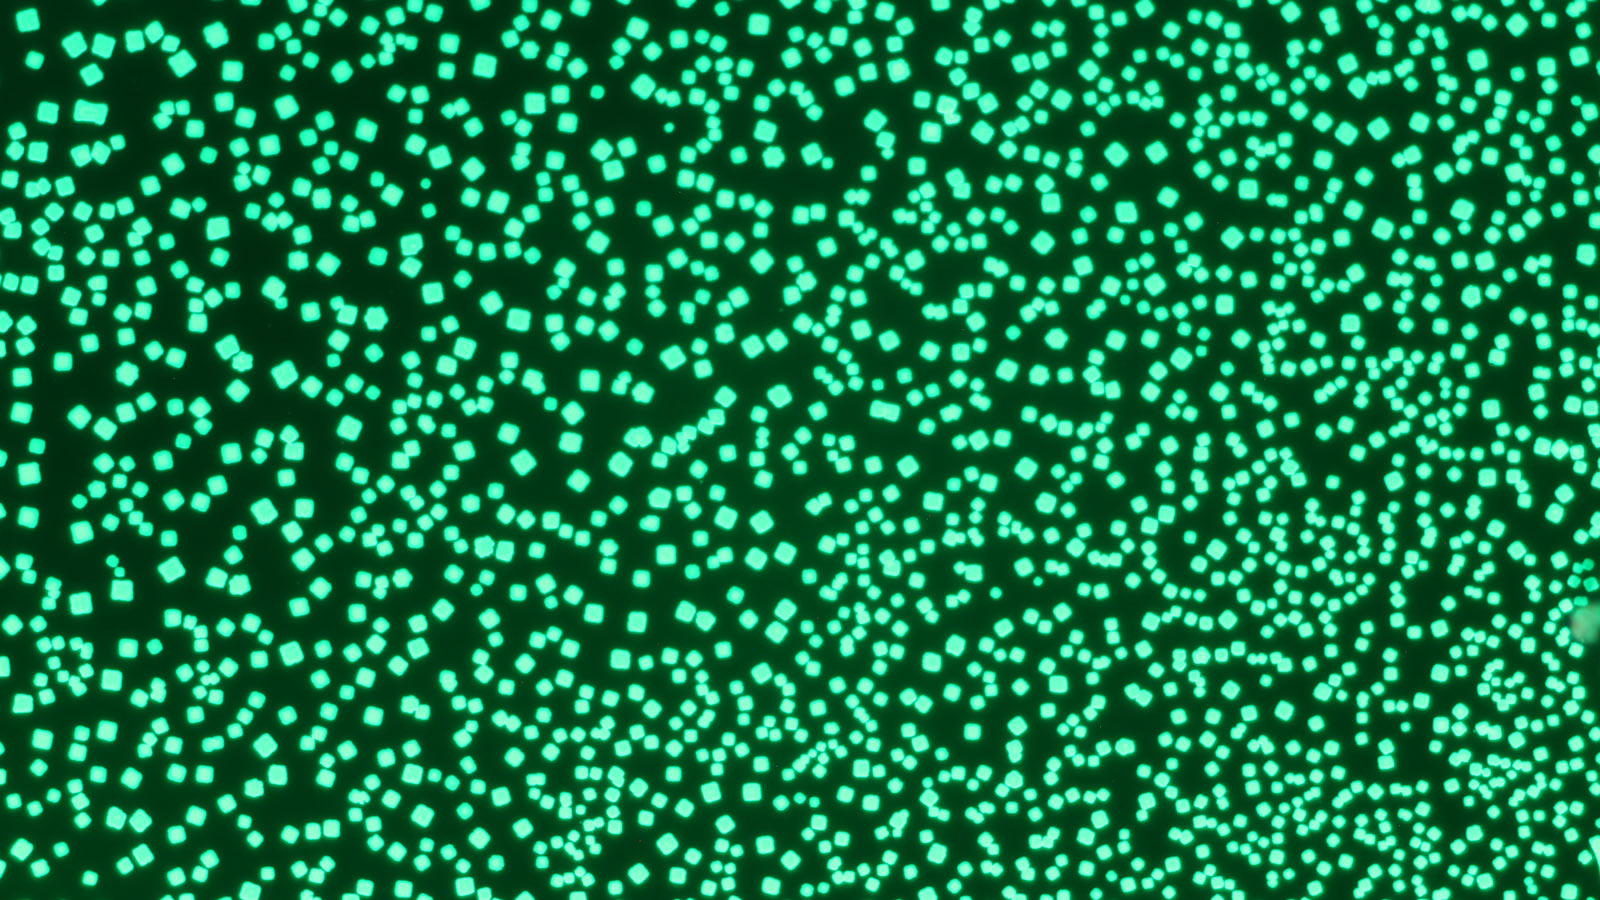 Fluorescent superlattices under the microscope (UV illumination). Photo © Dr. M. Bodnarchuk, Empa